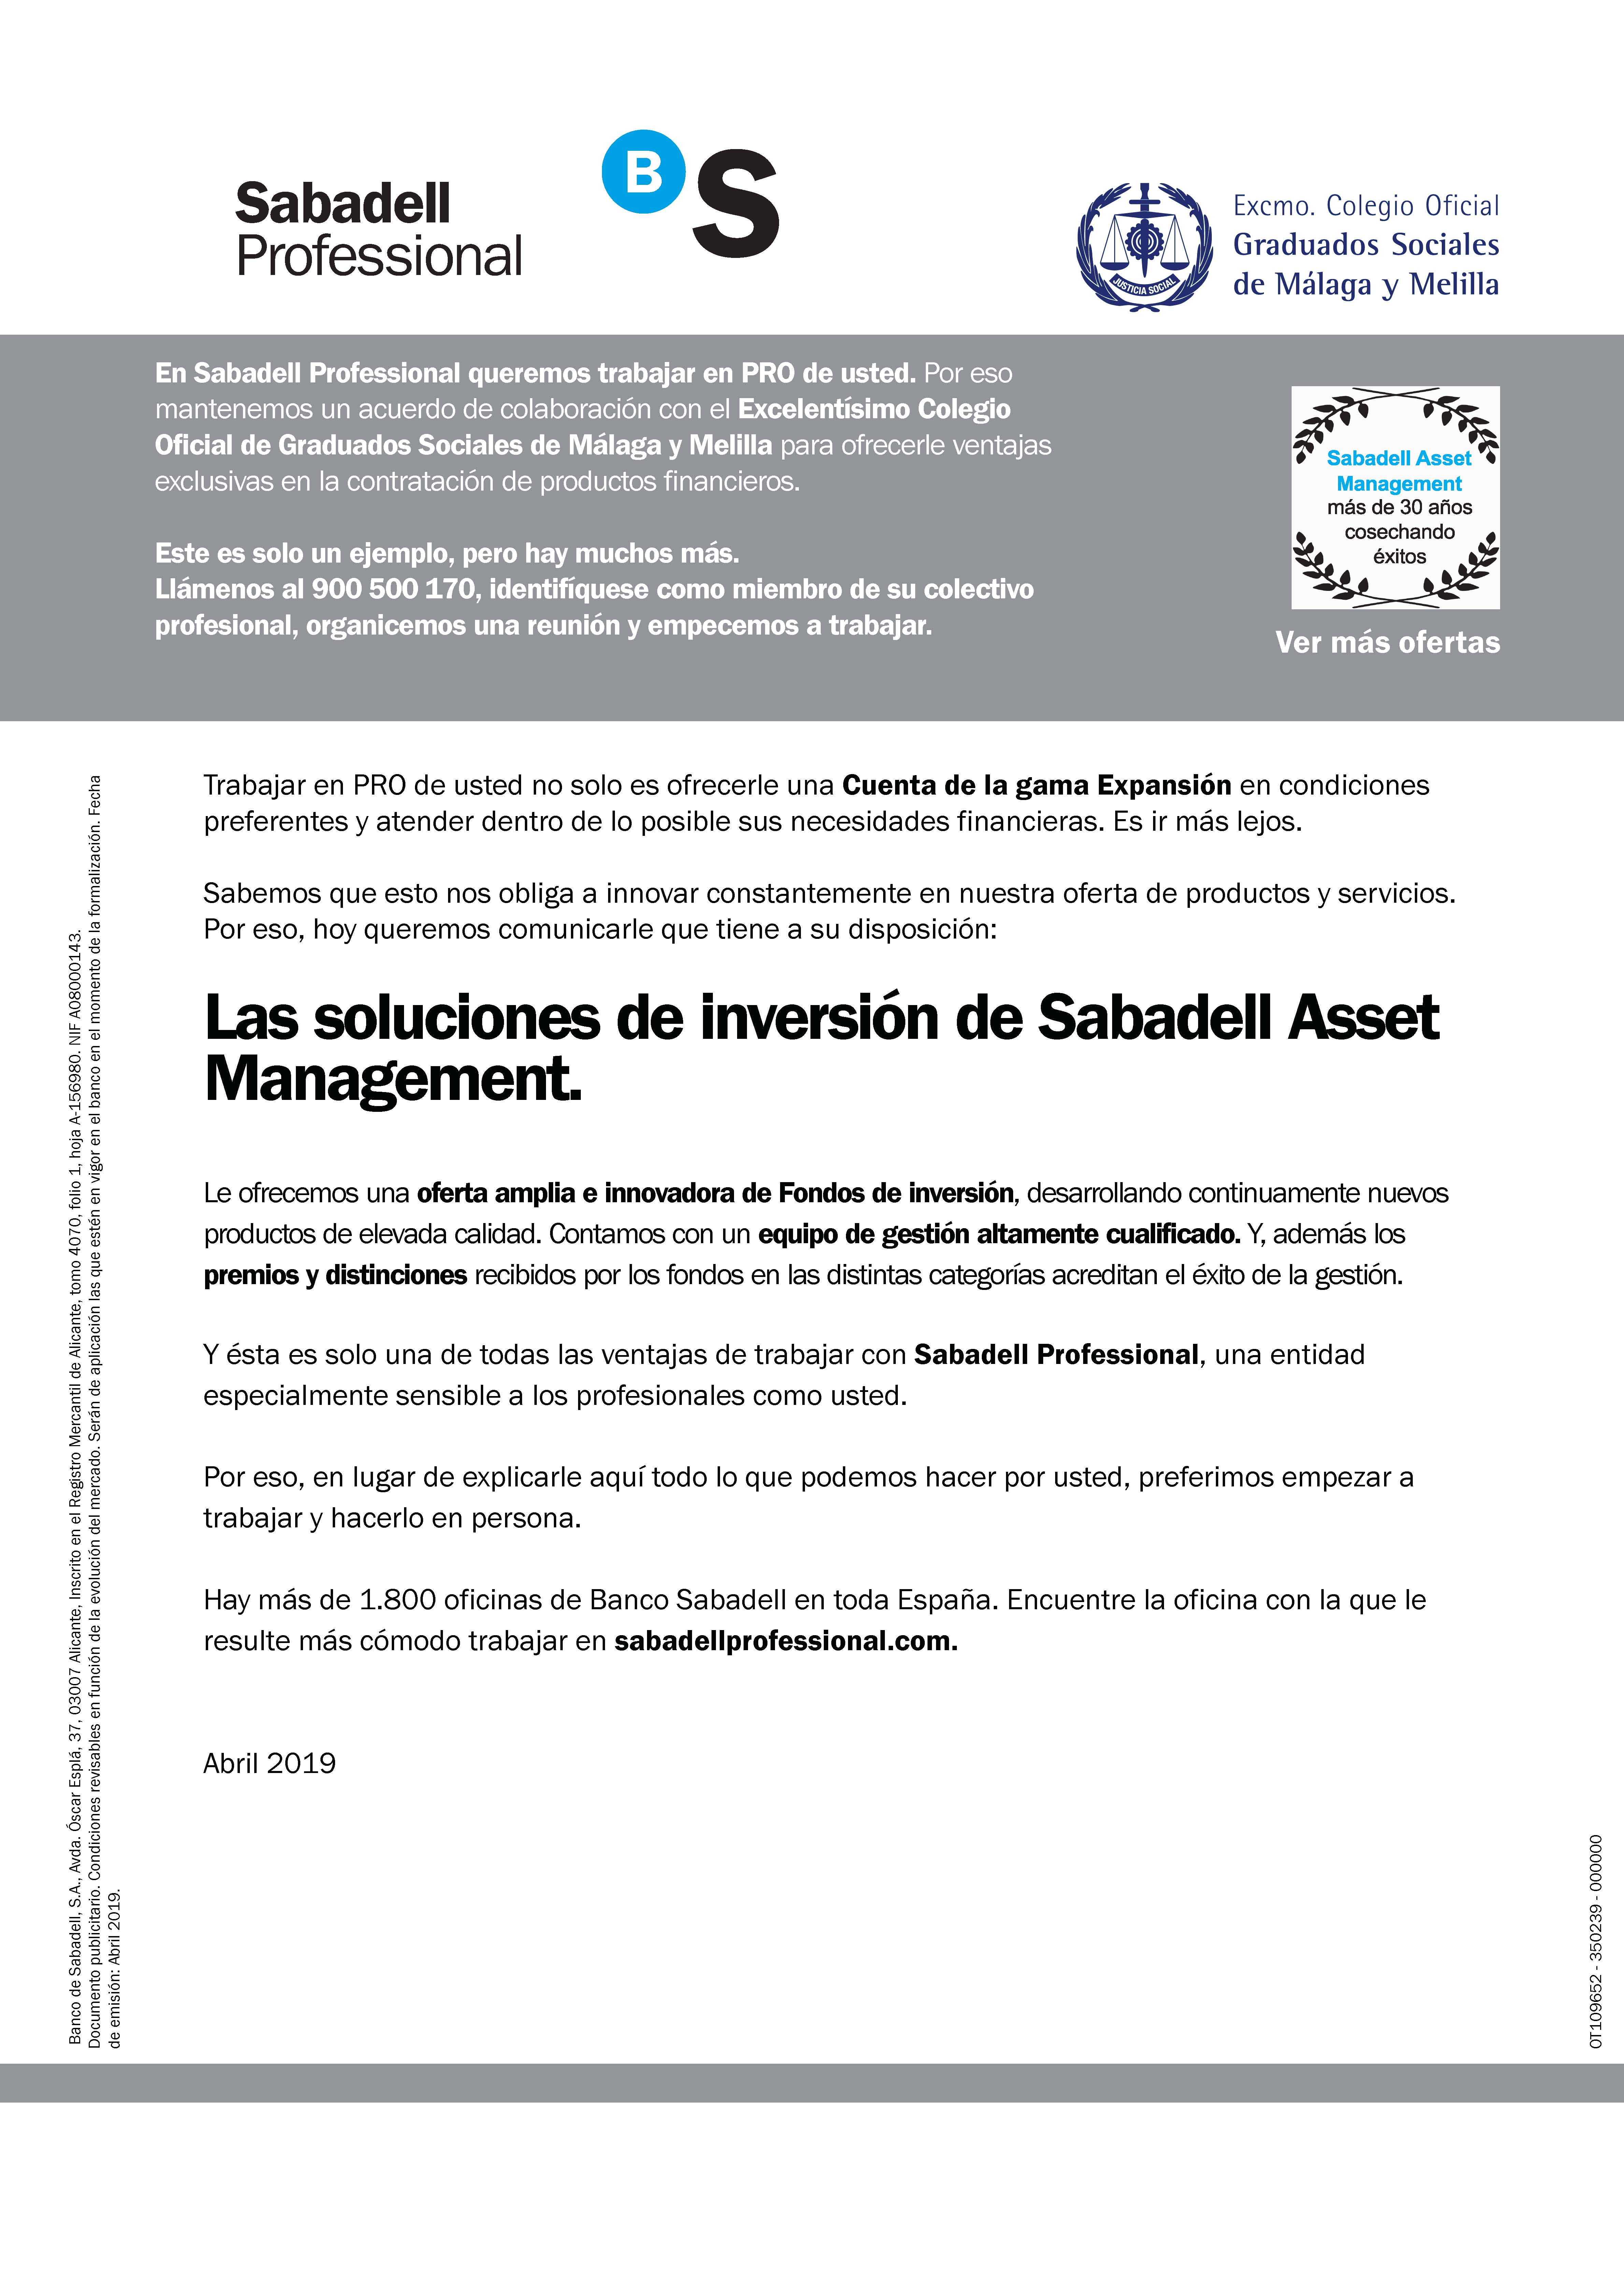 LAS SOLUCIONES DE INVERSION DE DE SABADELL ASSET MANAGEMENT1 Página 1